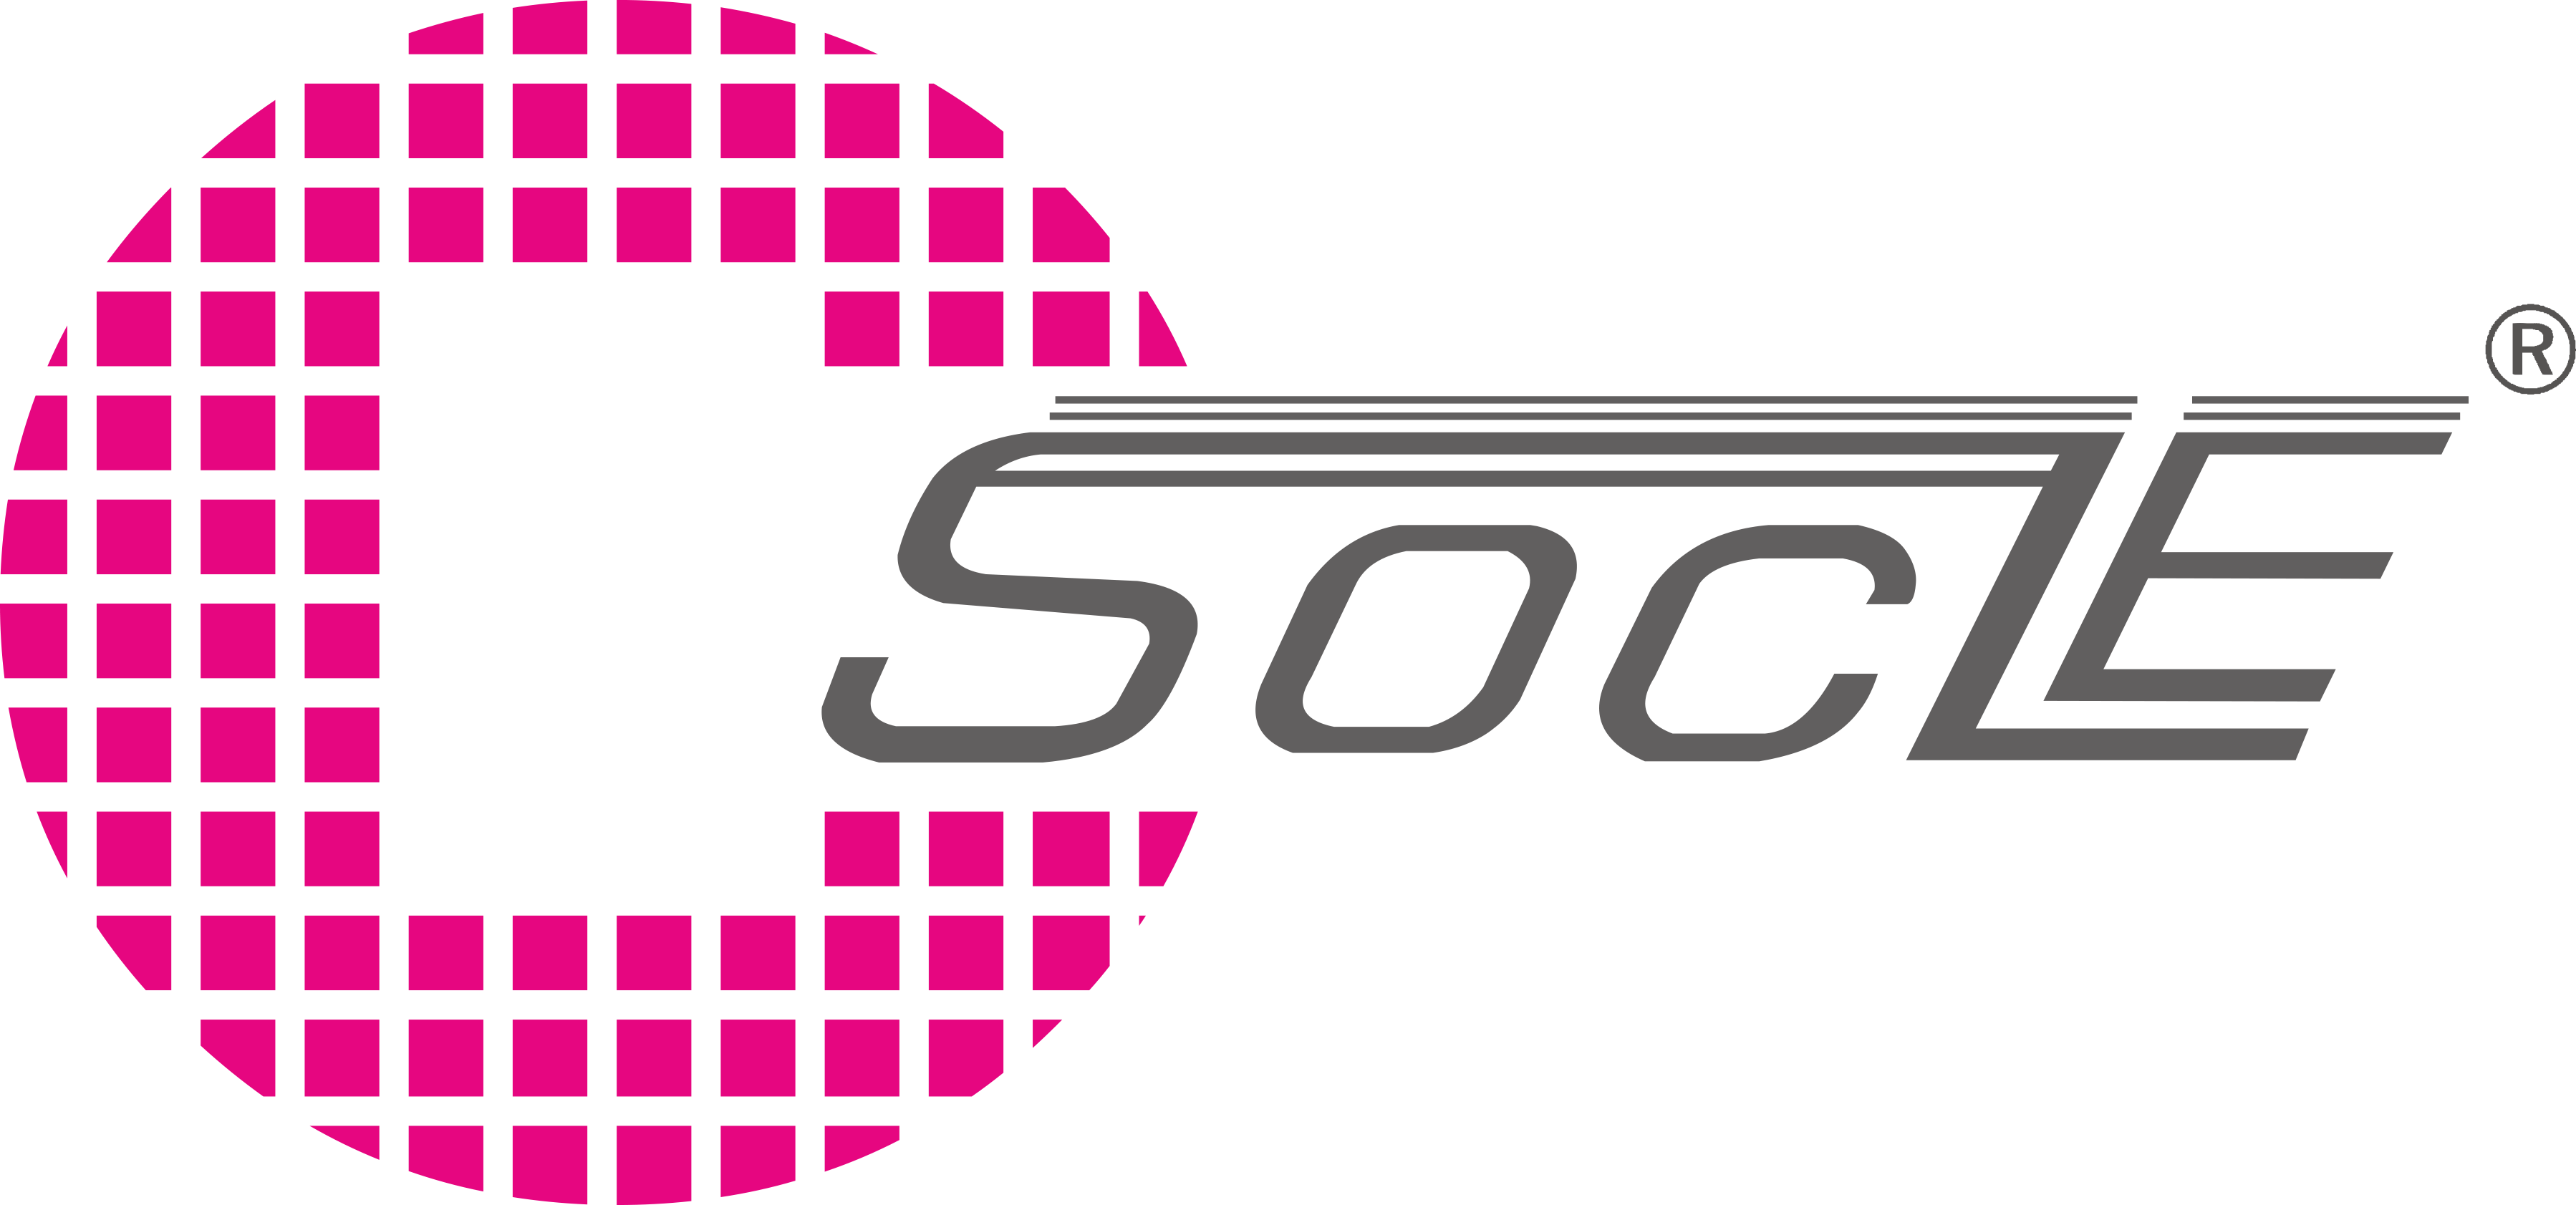 Socle Technology Corporation LOGO